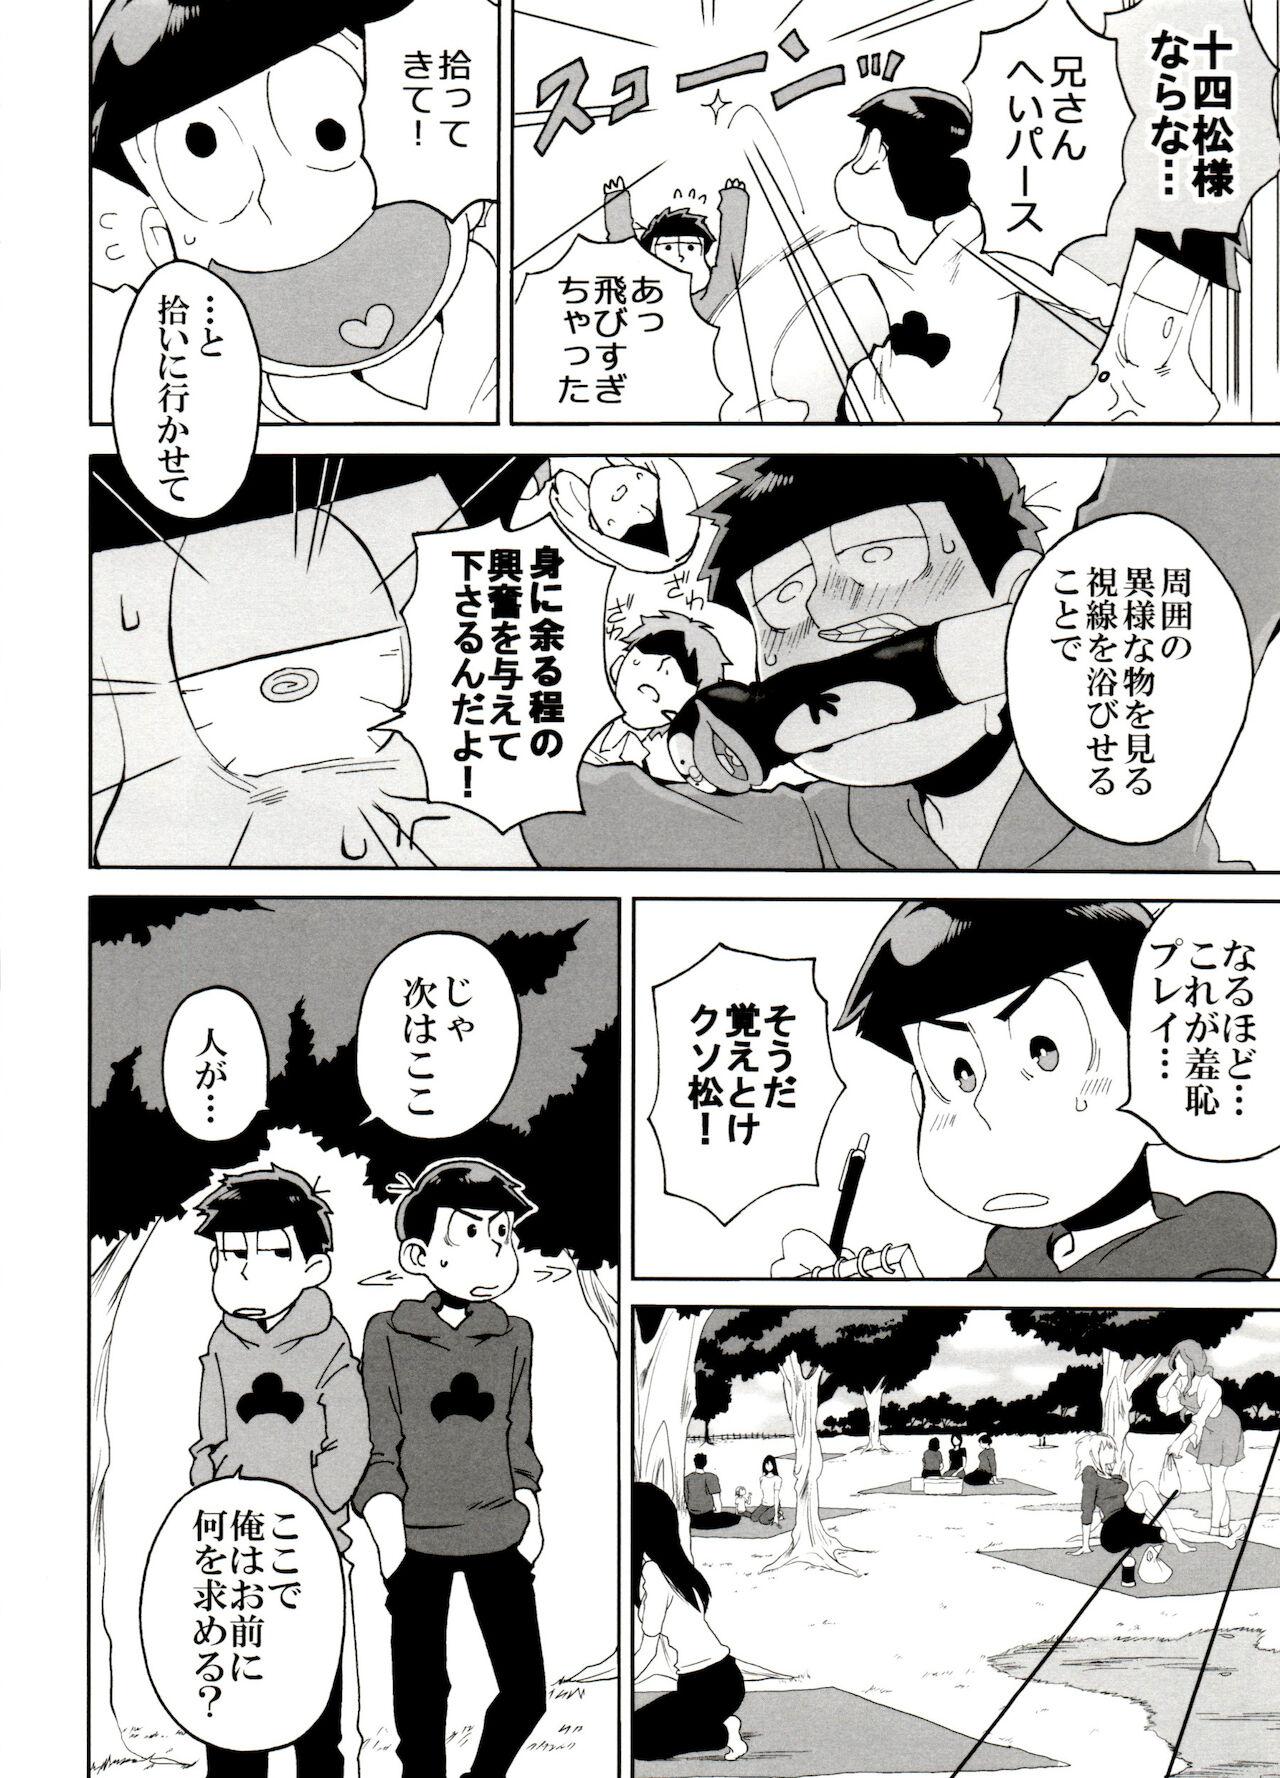 Bubblebutt SM Matsu 2 - Osomatsu-san Pegging - Page 8